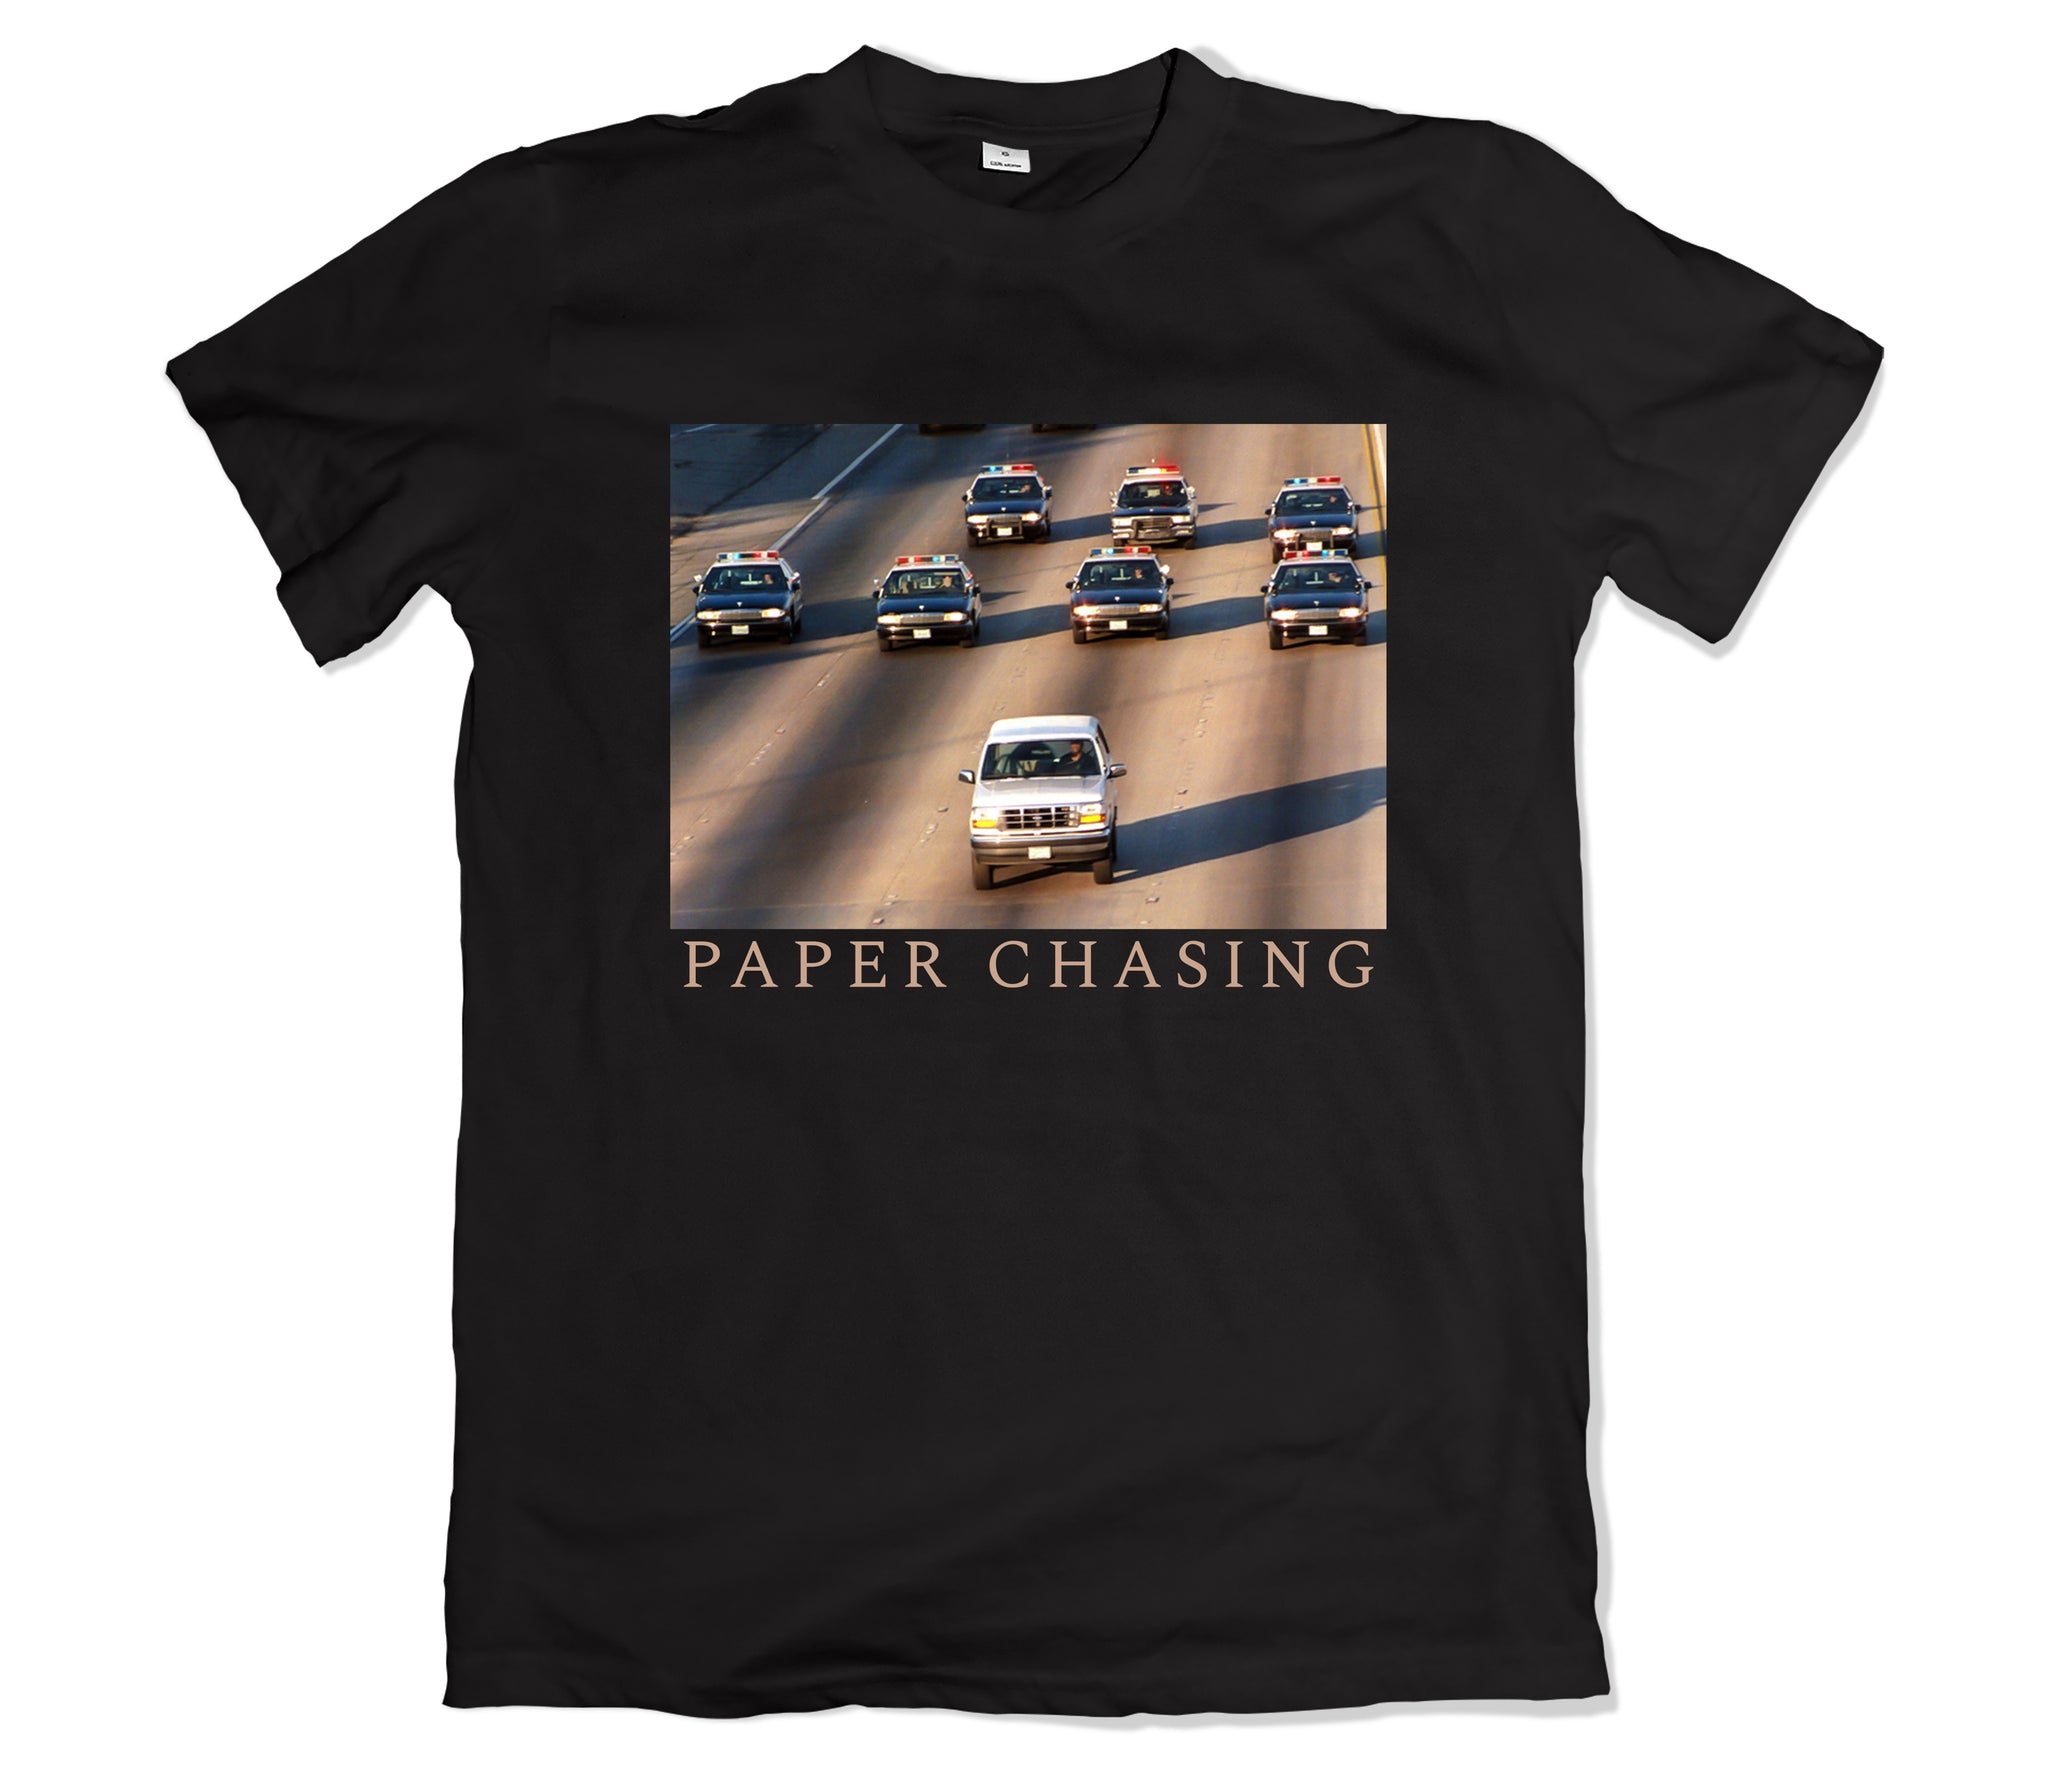 Paper Chasing Tee Shirt - TOPS, TSS CUSTOM GRPHX, SNEAKER STUDIO, GOLDEN GILT, DESIGN BY TSS